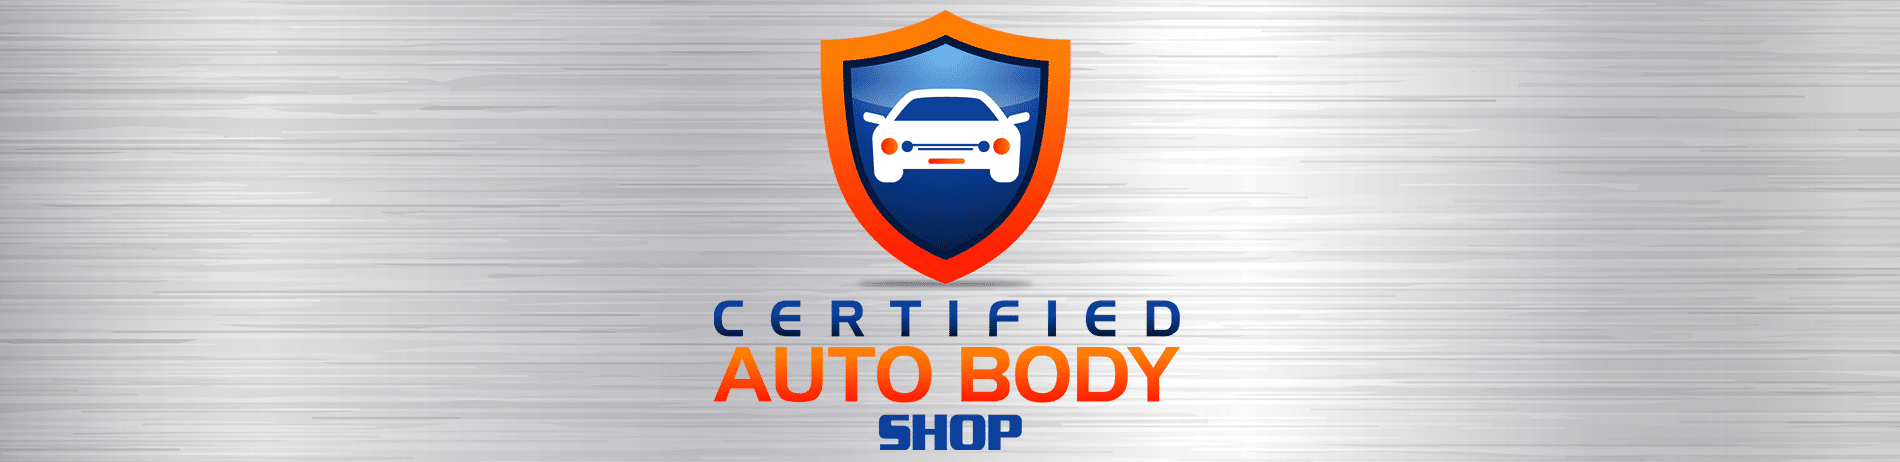 Nissan Certified Auto Body Shop